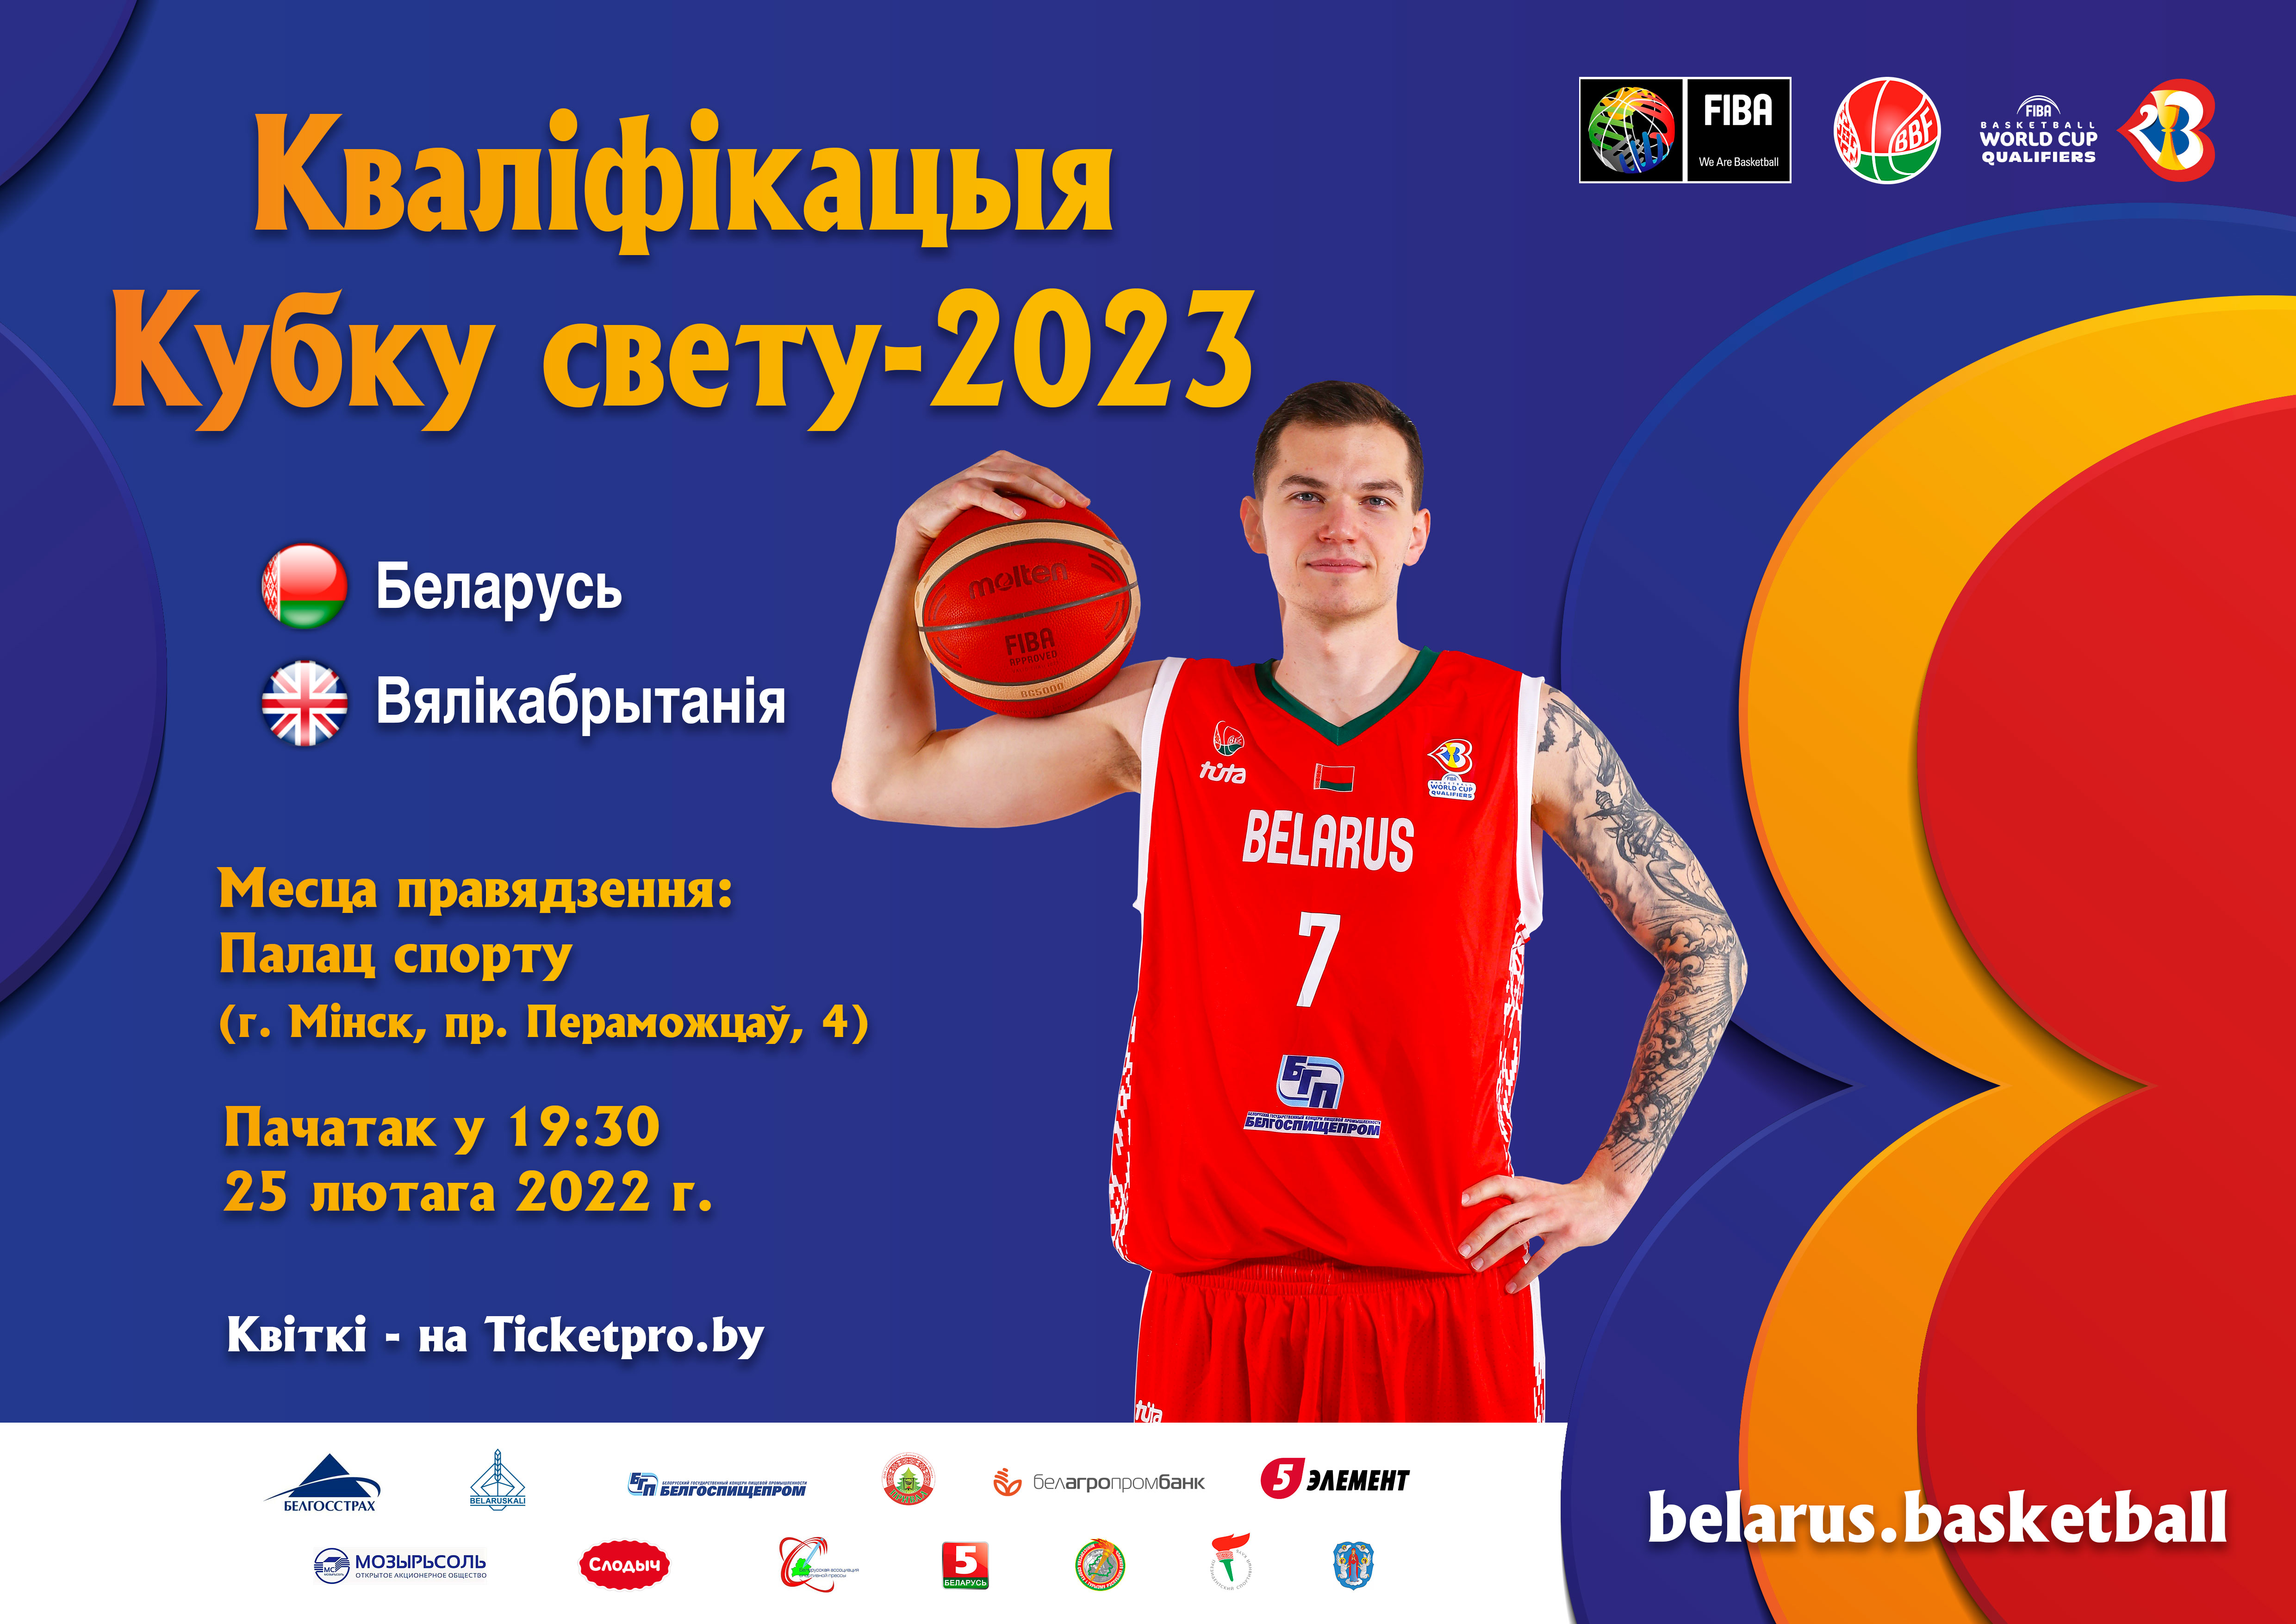 Belarus Great Britain 27 01 2022